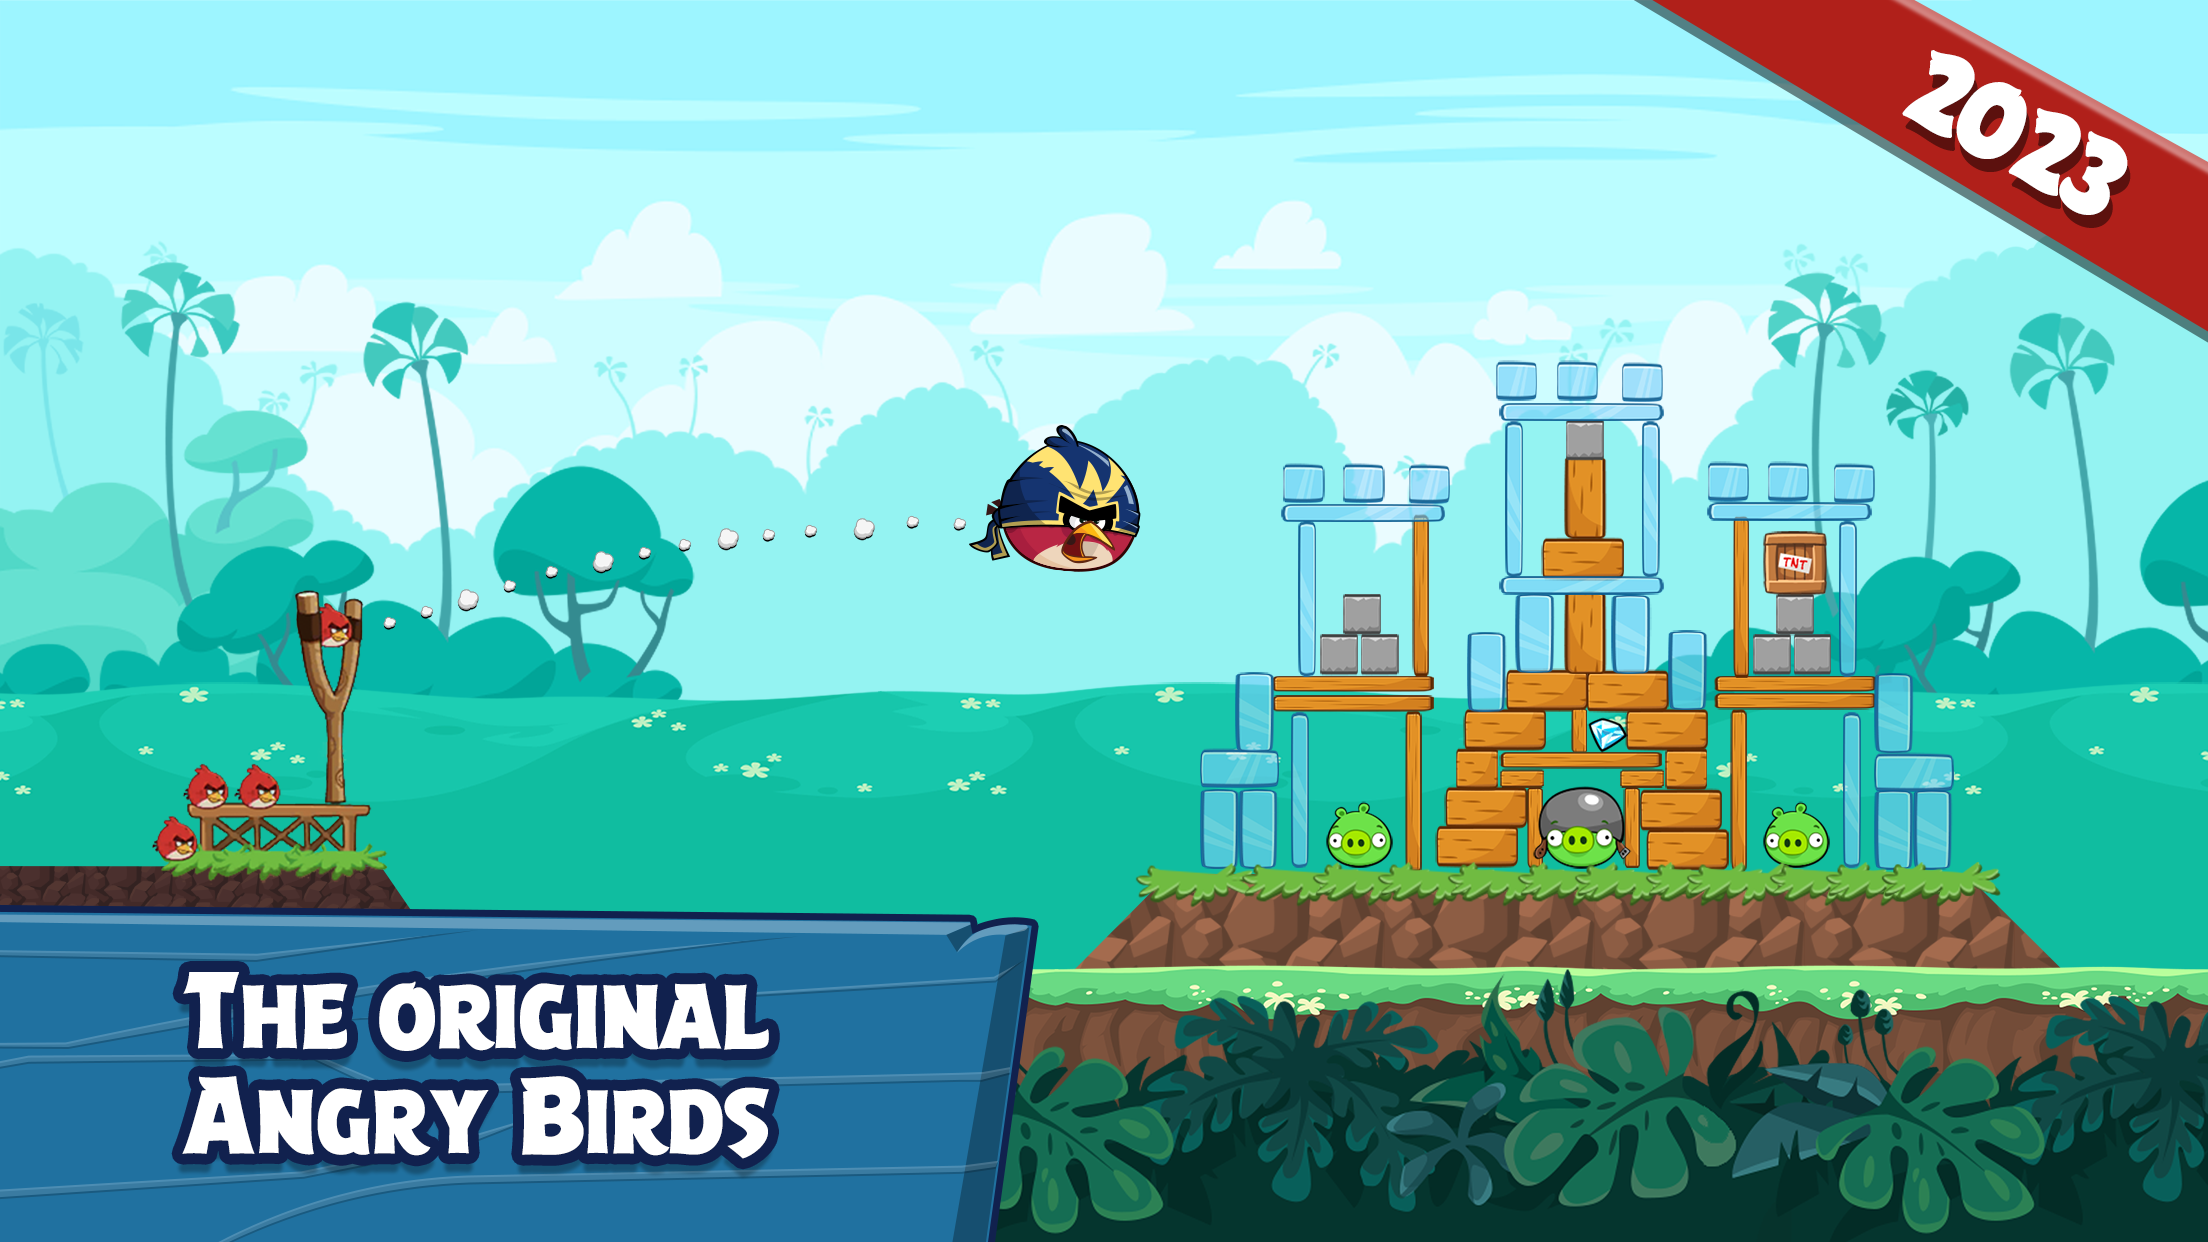 Screenshot 1 of Angry Birds သူငယ်ချင်းများ 12.1.0